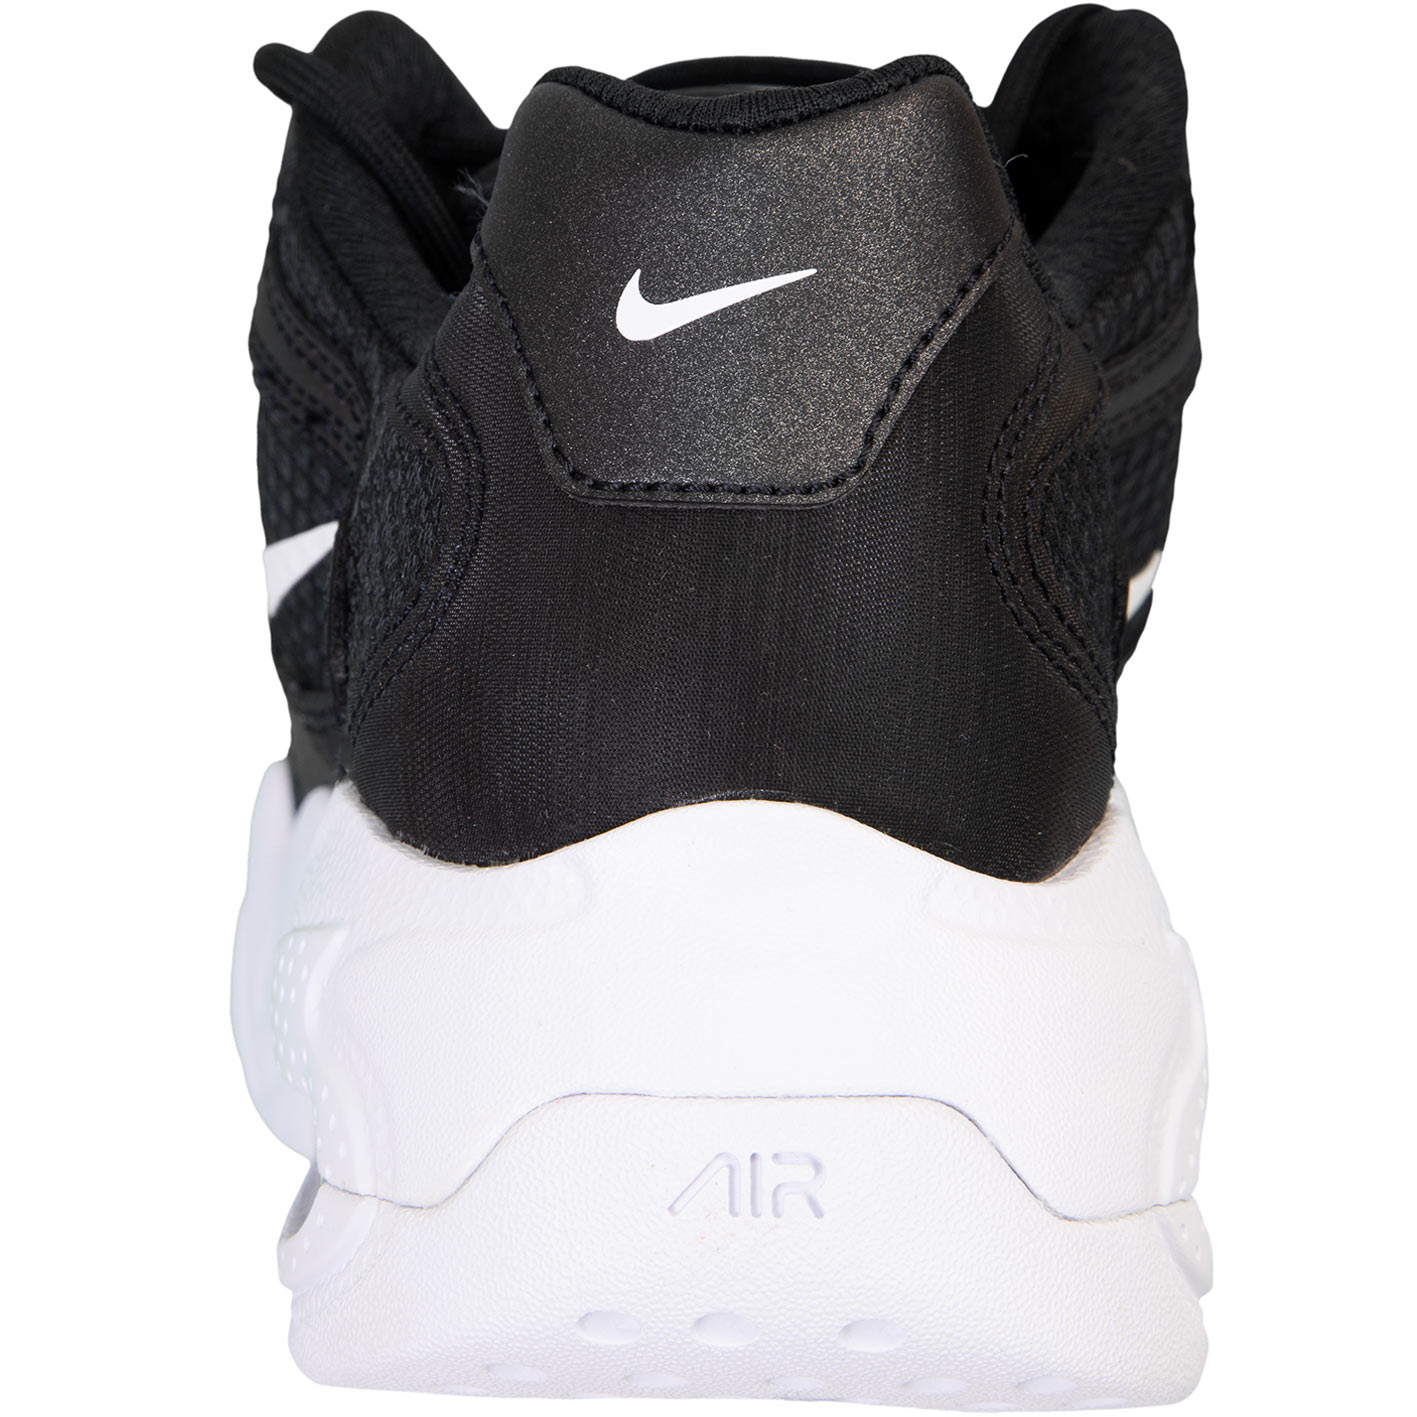 ☆ Nike Air Max 2X Damen Sneaker Schuhe schwarz/weiß - hier bestellen!